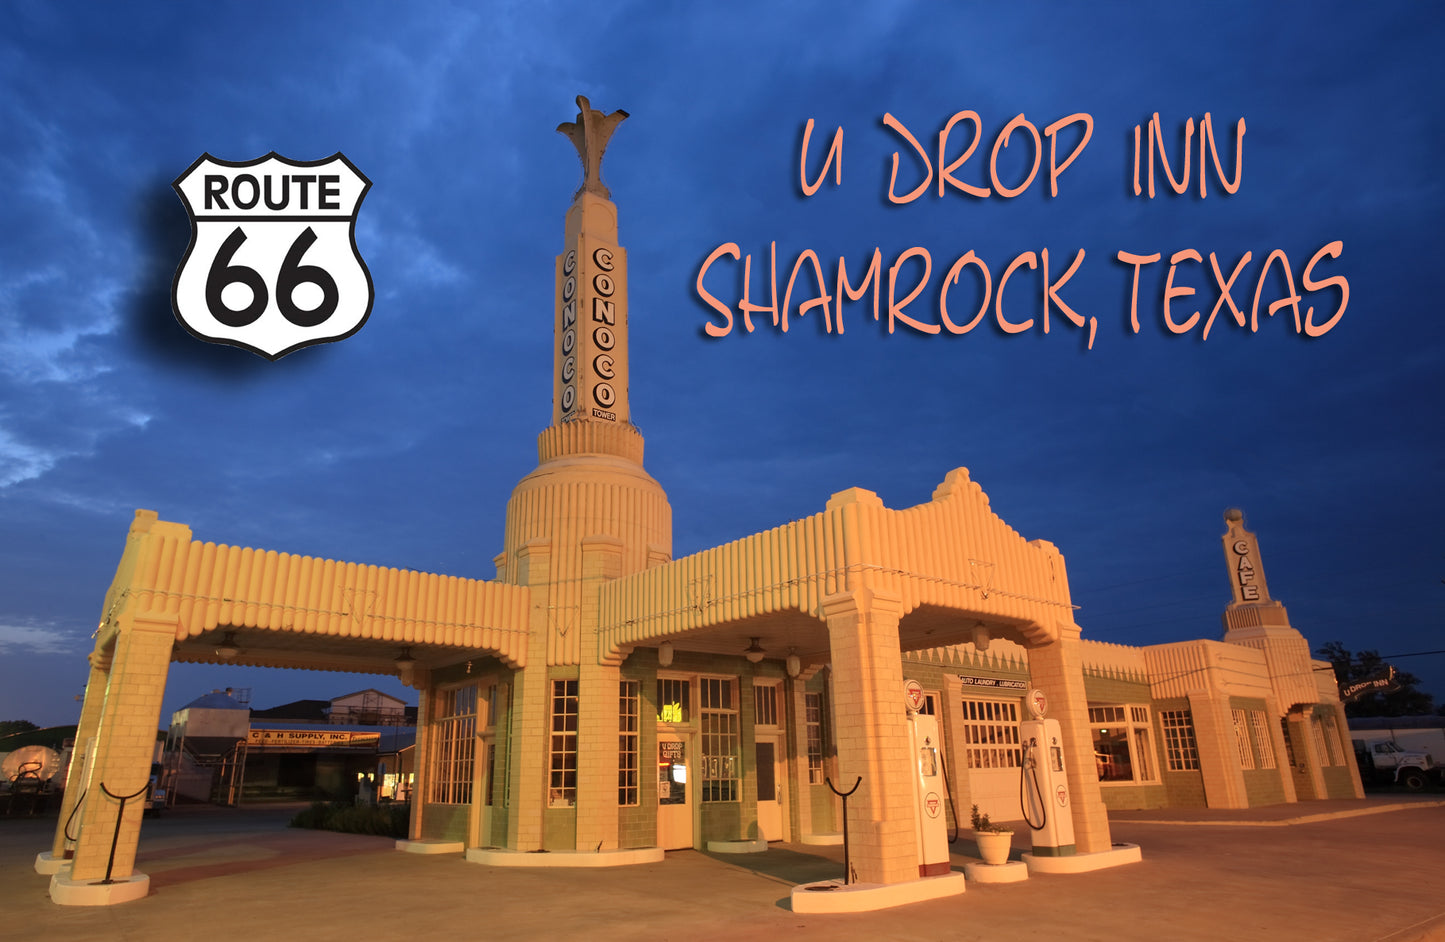 Route 66 Fridge Magnet featuring the U Drop Inn in Shamrock, TX